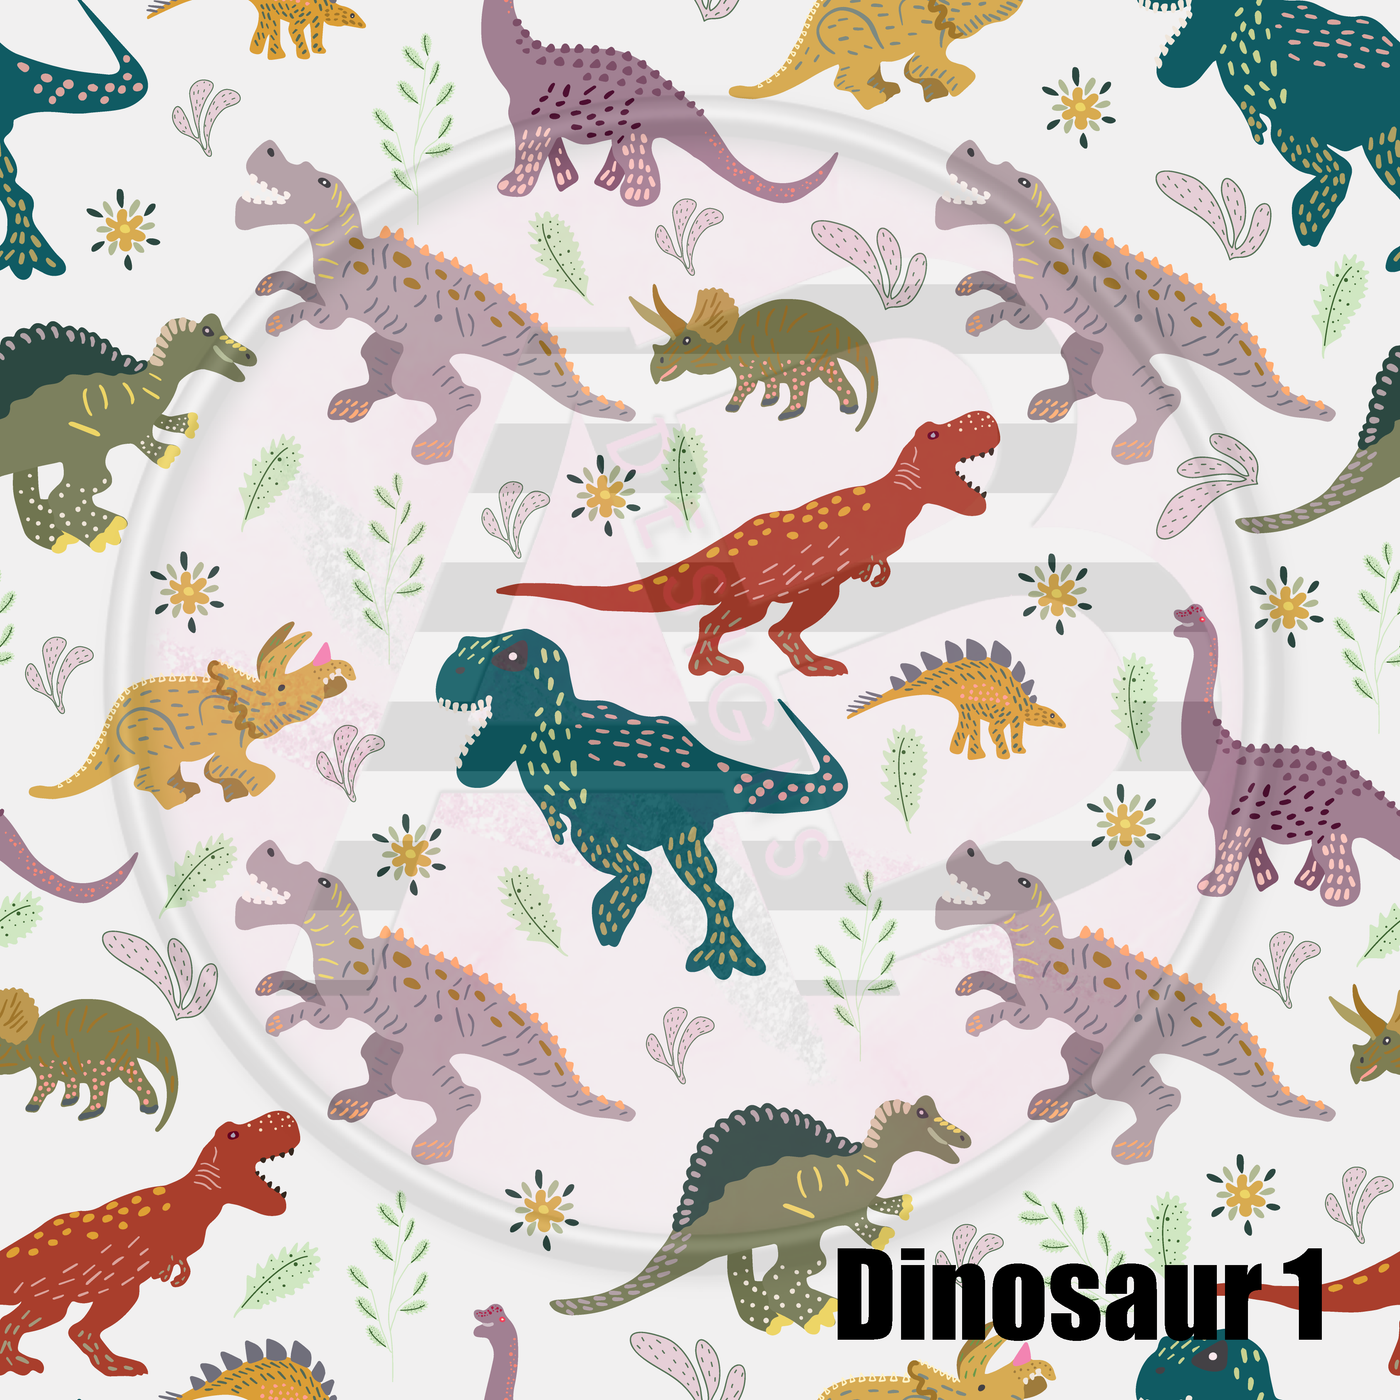 Adhesive Patterned Vinyl - Dinosaur 1